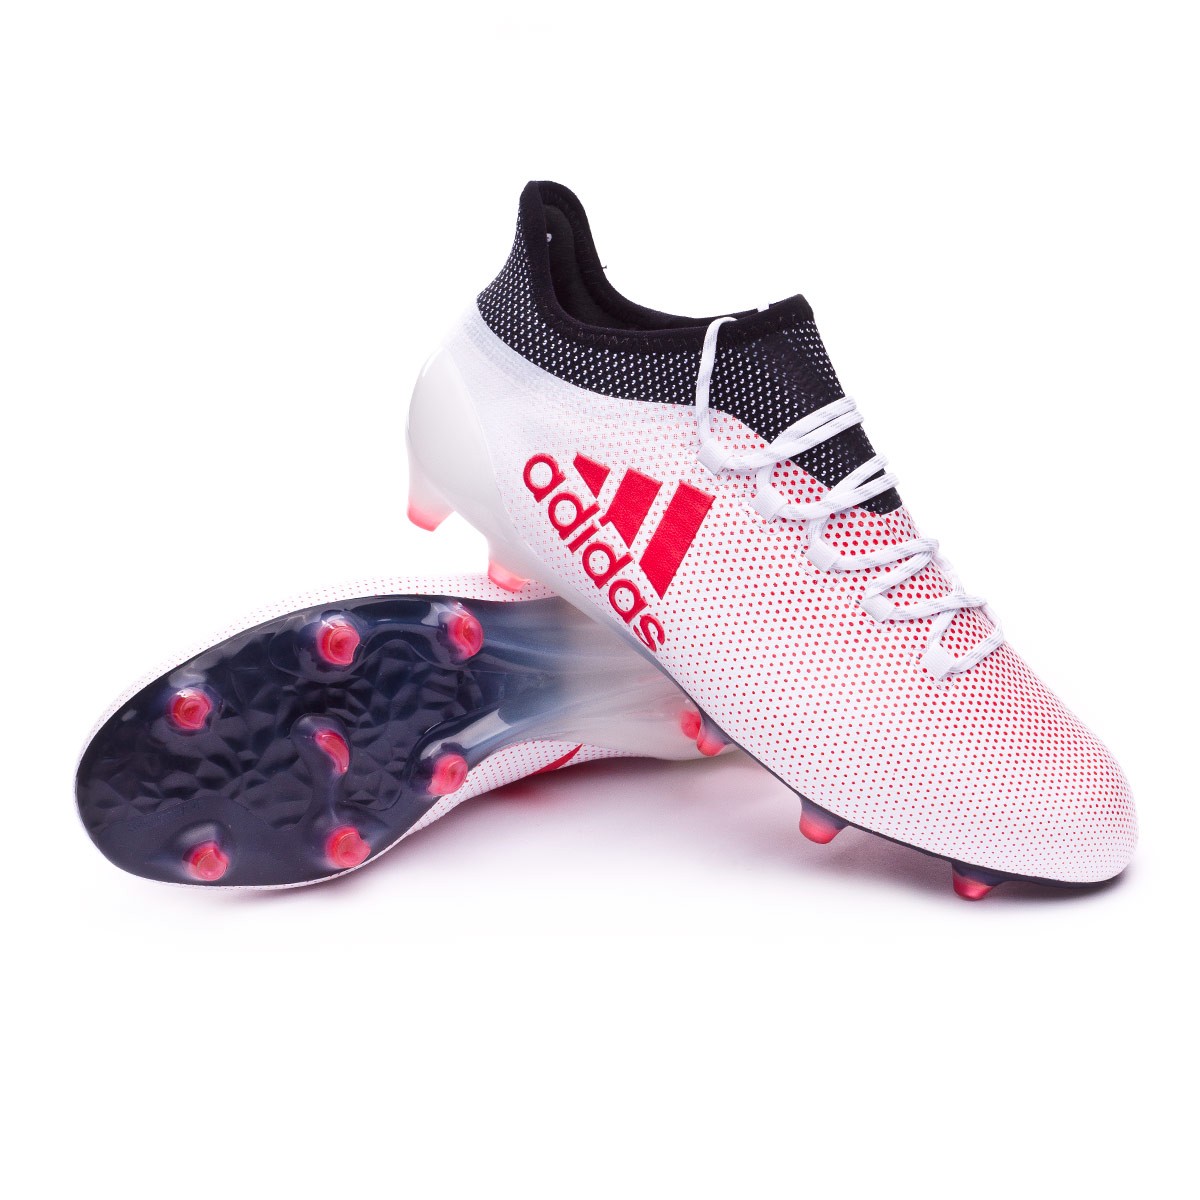 Football Boots adidas X 17.1 FG Grey 